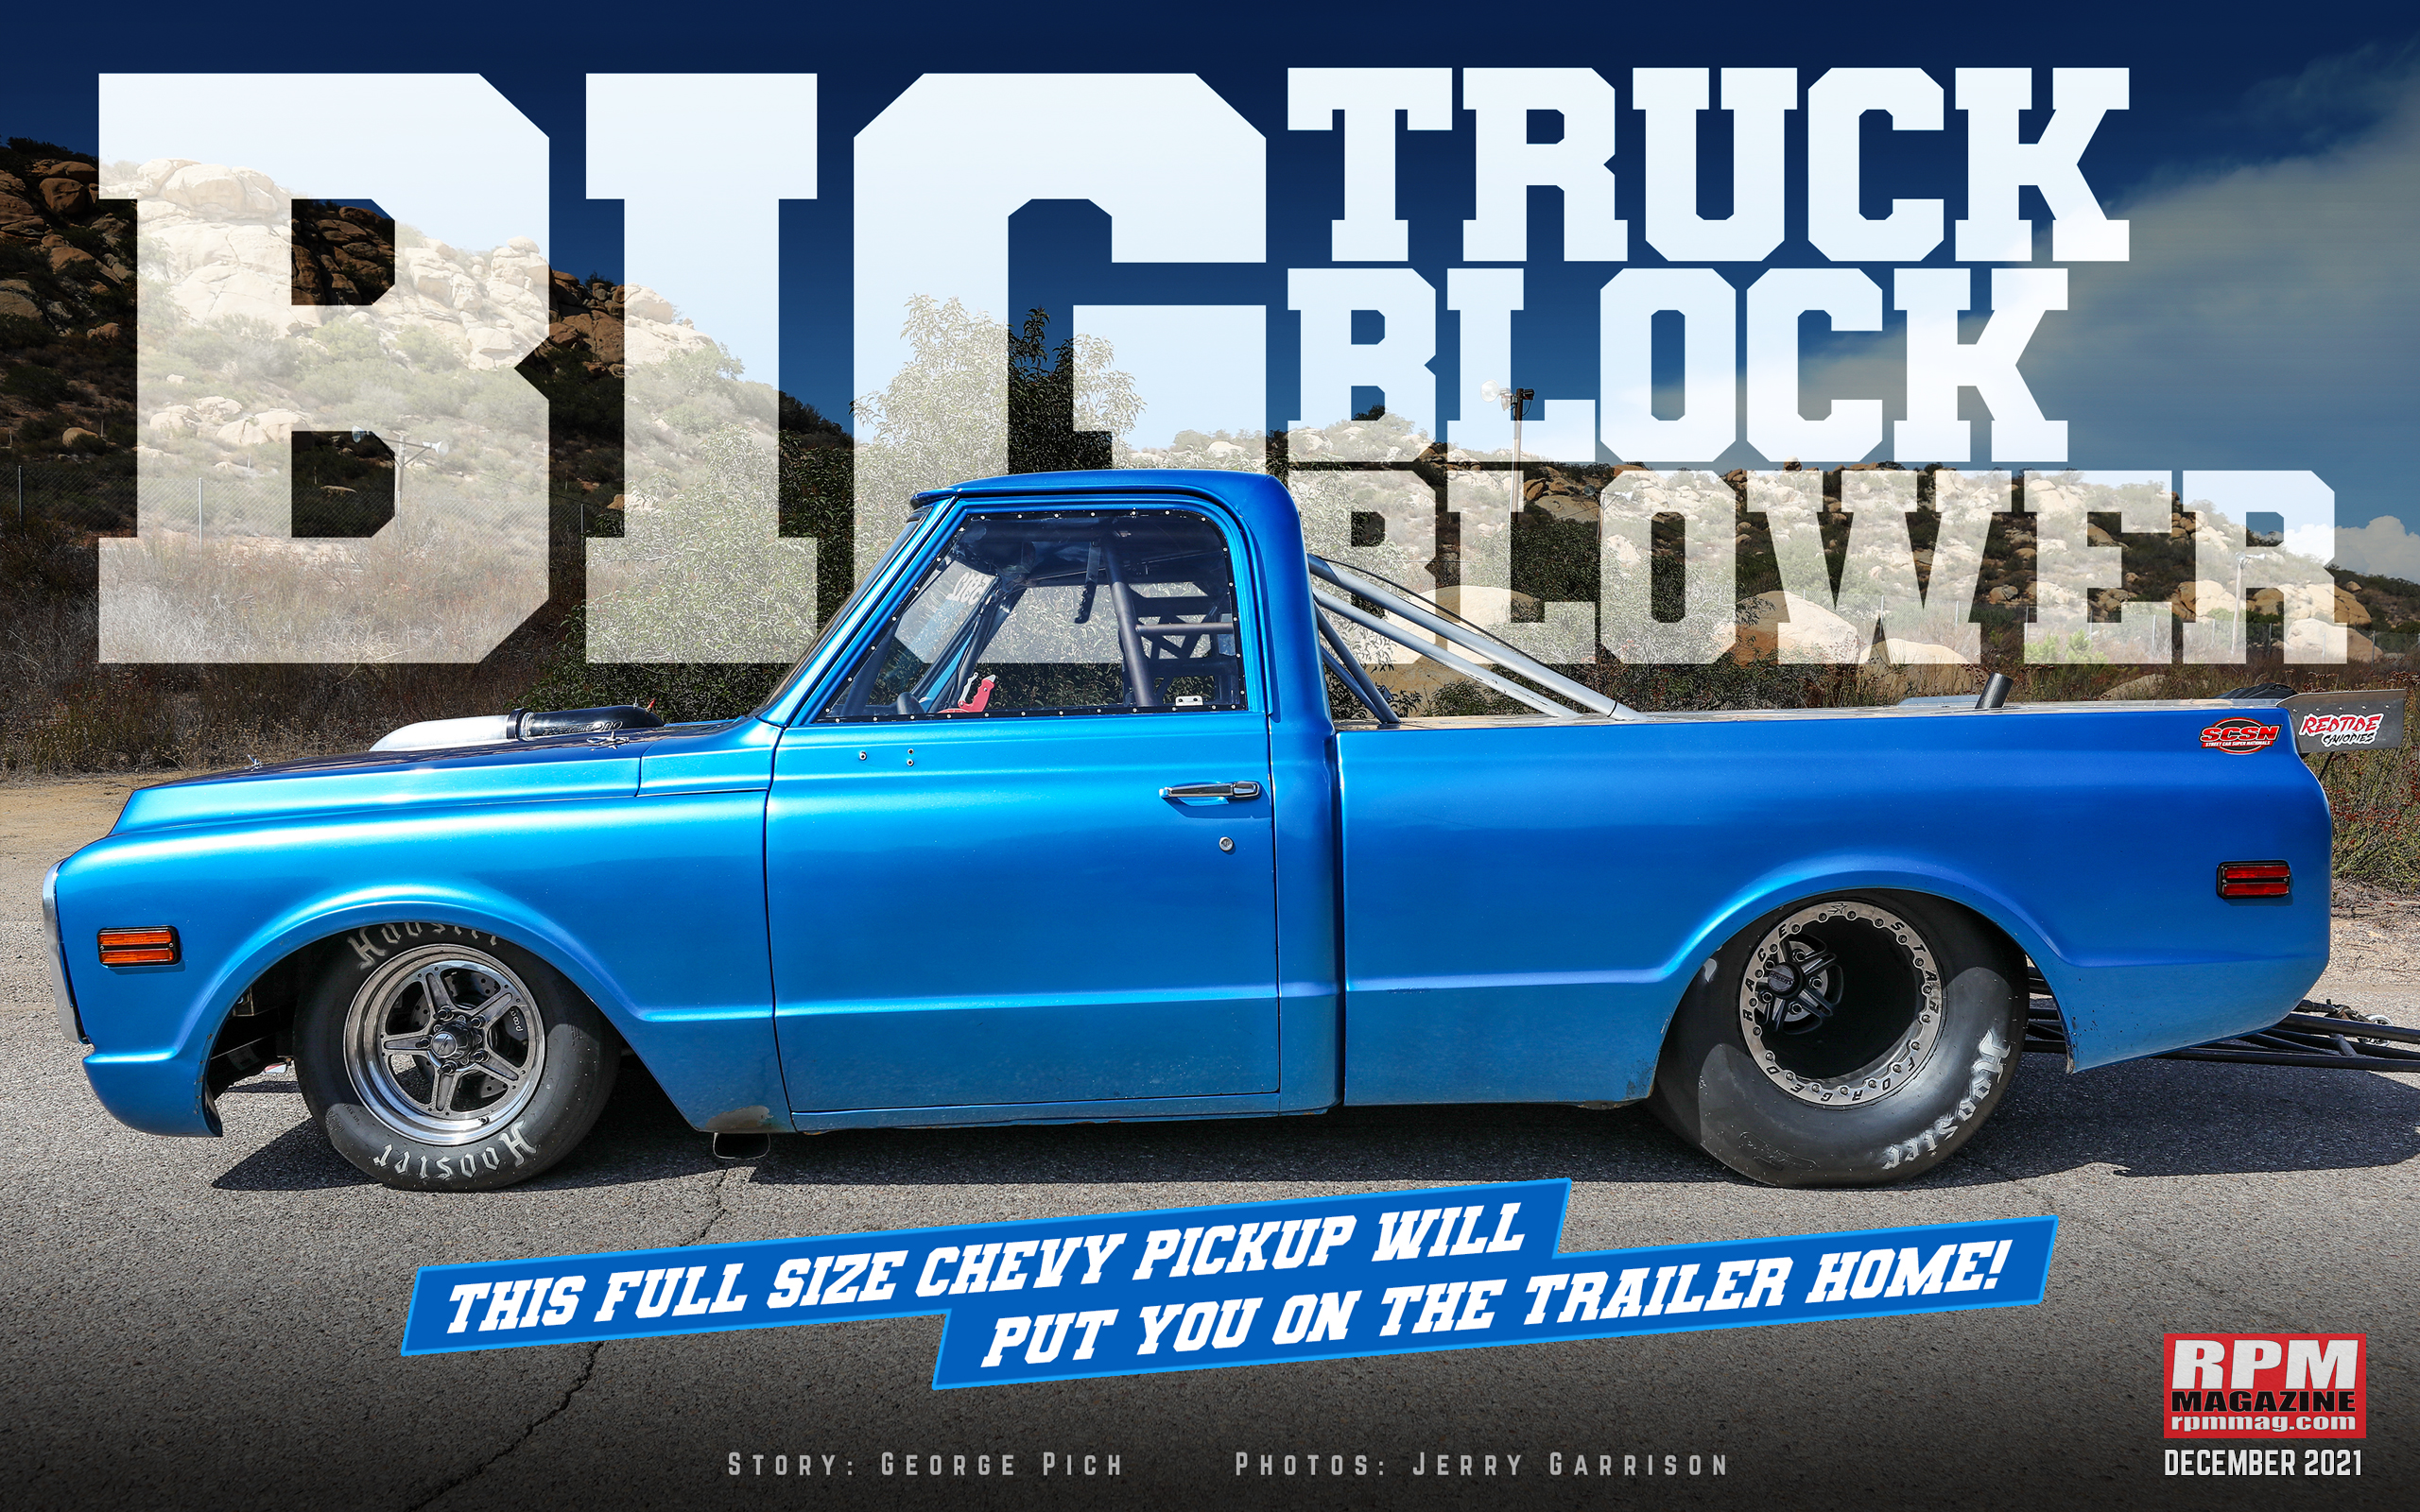 Blue Chevy Truck - Big Truck, Big Block, Big Blower